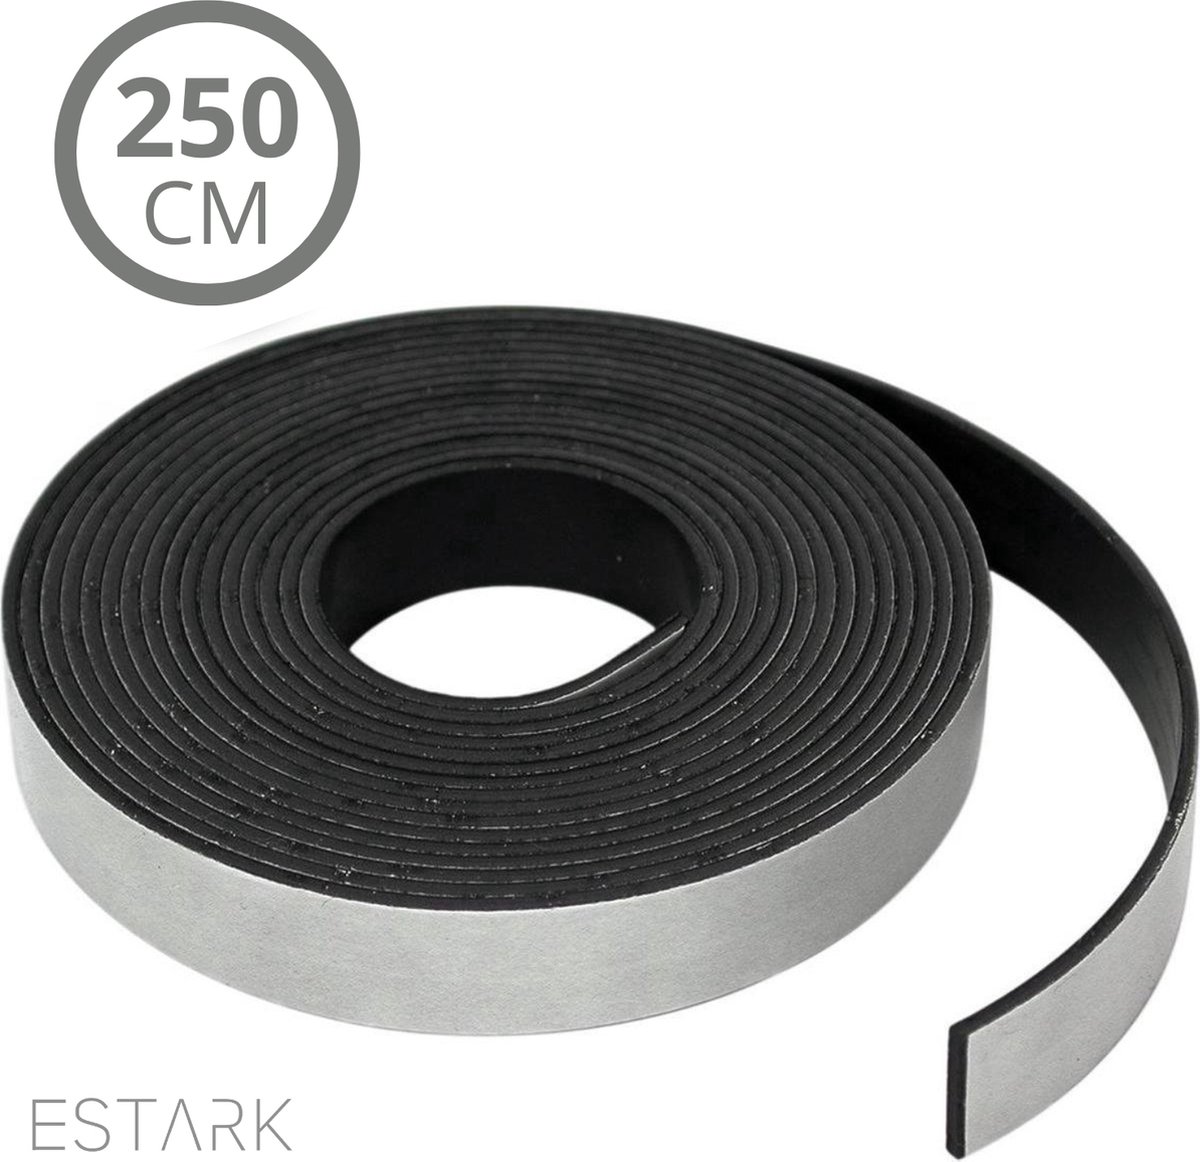 ESTARK® Magneetstrip zelfklevend - 250cm lang - Magneettape - Magneetband zelfklevend - ESTARK